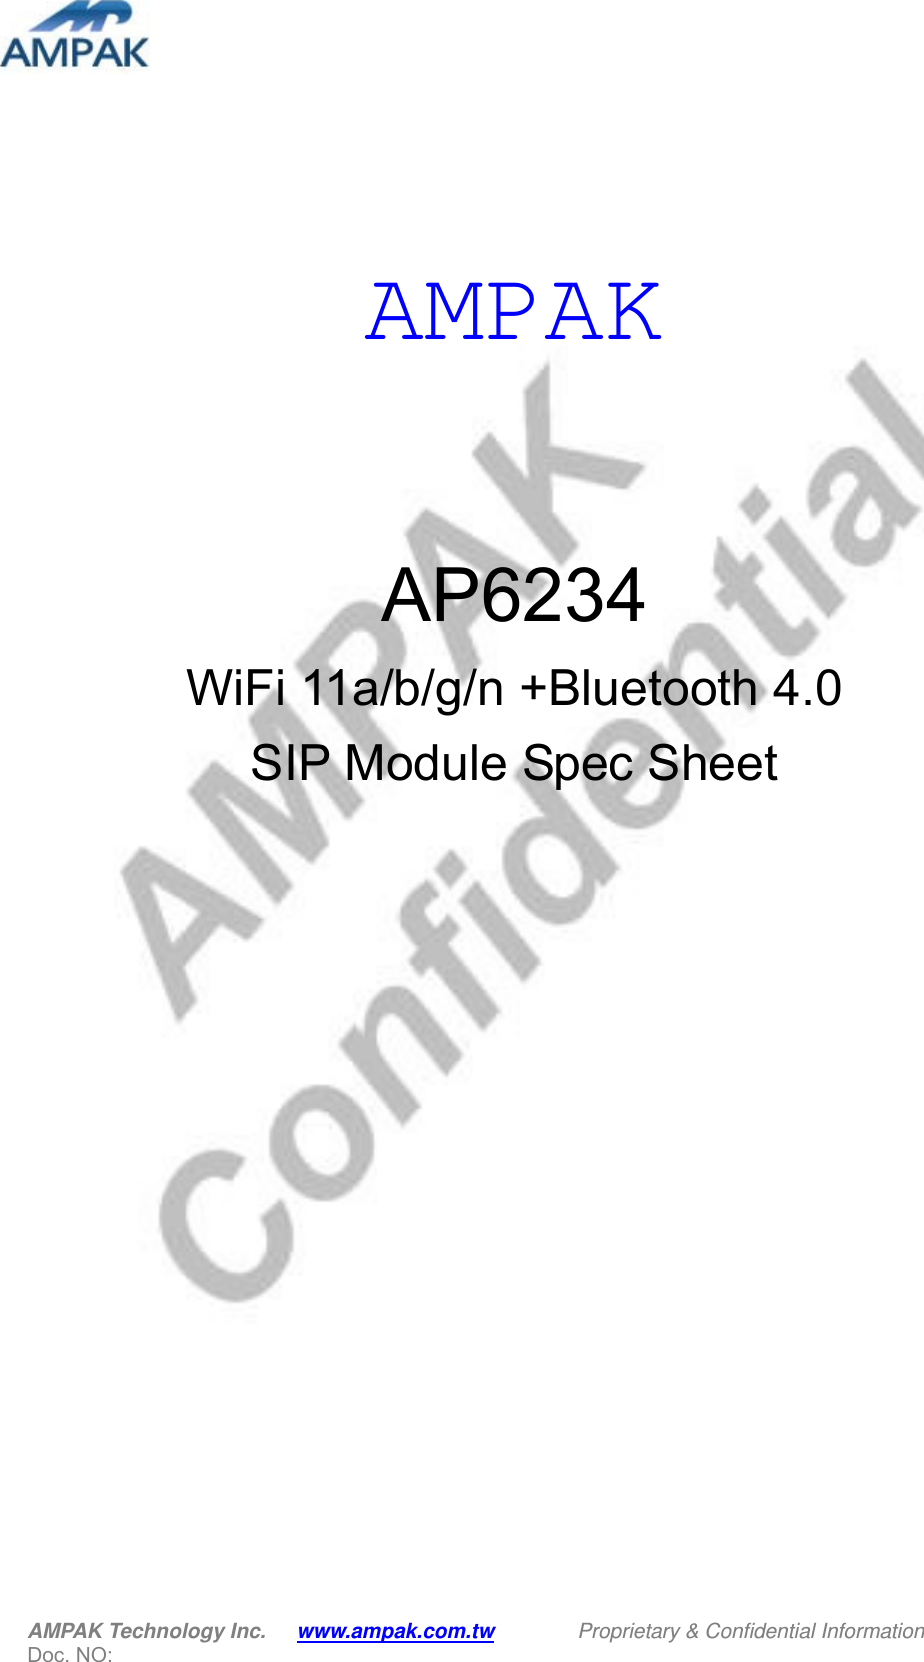  AMPAK Technology Inc.      www.ampak.com.tw        Proprietary &amp; Confidential Information   Doc. NO:       AMPAK     AP6234 WiFi 11a/b/g/n +Bluetooth 4.0 SIP Module Spec Sheet     